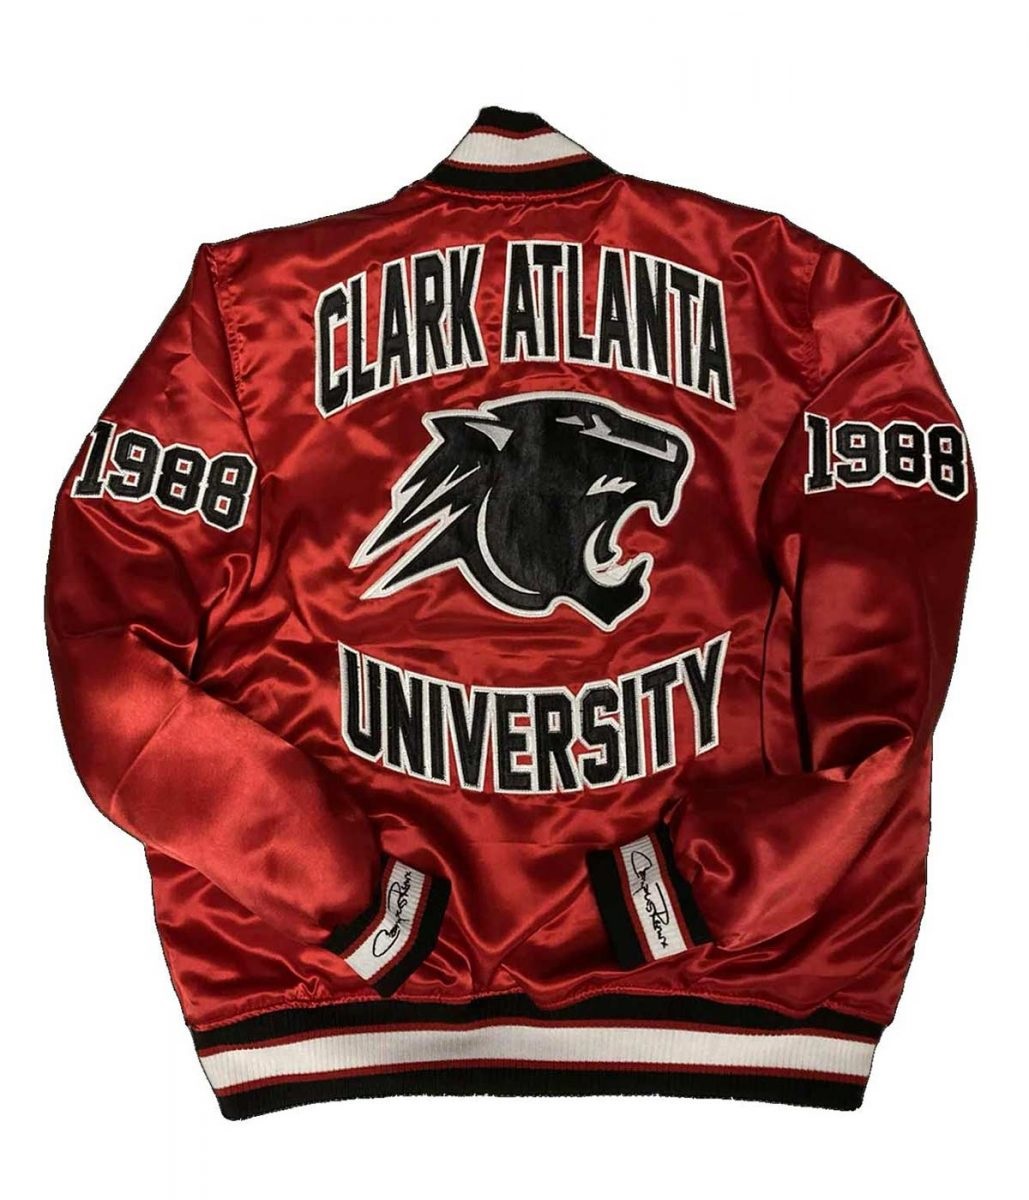 Clark Atlanta University Satin Jacket